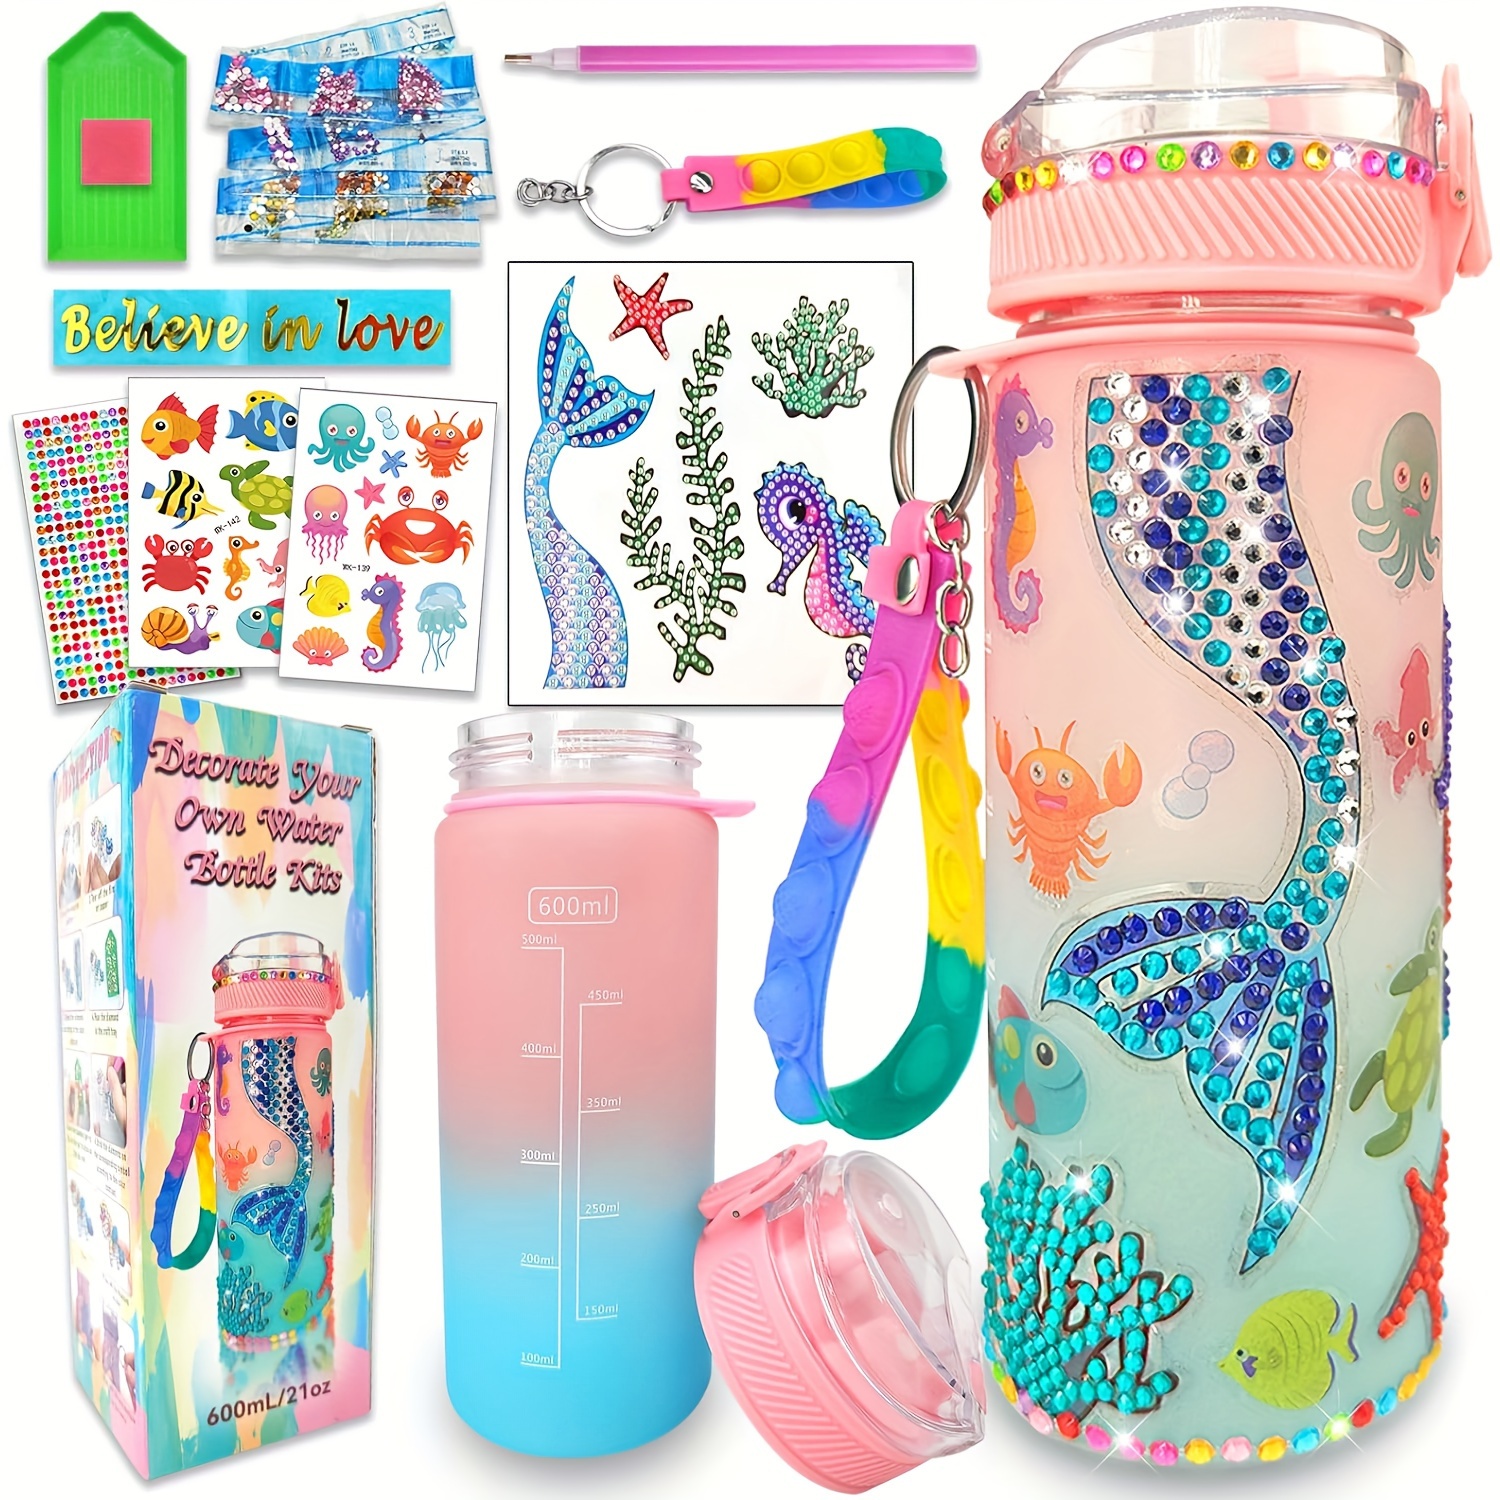 

1 Pack Diy Water Bottle Kits, 600ml/20.29oz Bottles With Mermaid & Unicorn Stickers, Gemstone & Diamond Painting Crafts, Fun Diy Art Gifts For Birthday, Creative Summer Crafting Sets